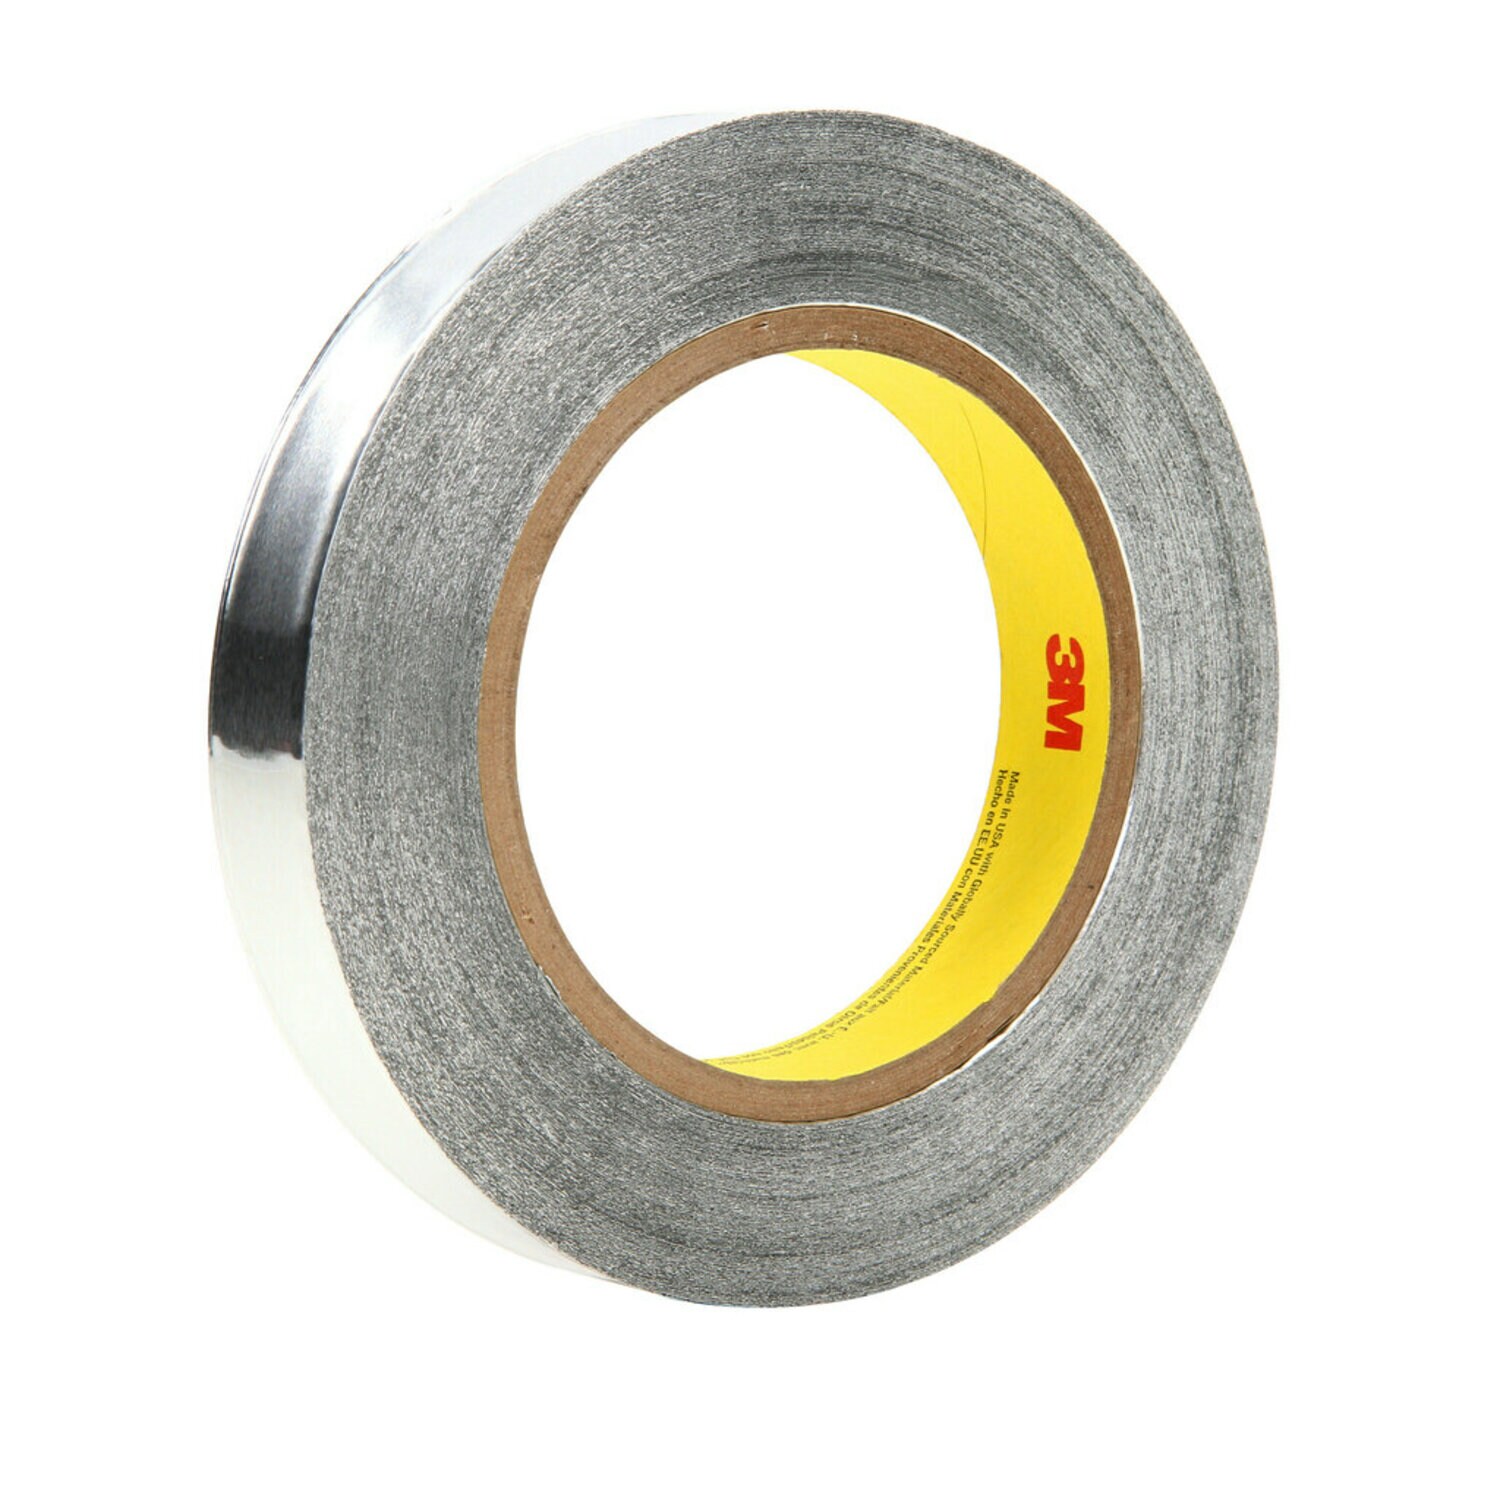 7100059421 - 3M Aluminum Foil Tape 425, Silver, 25 mm x 55 m, 4.6 mil, 36 rolls per
case